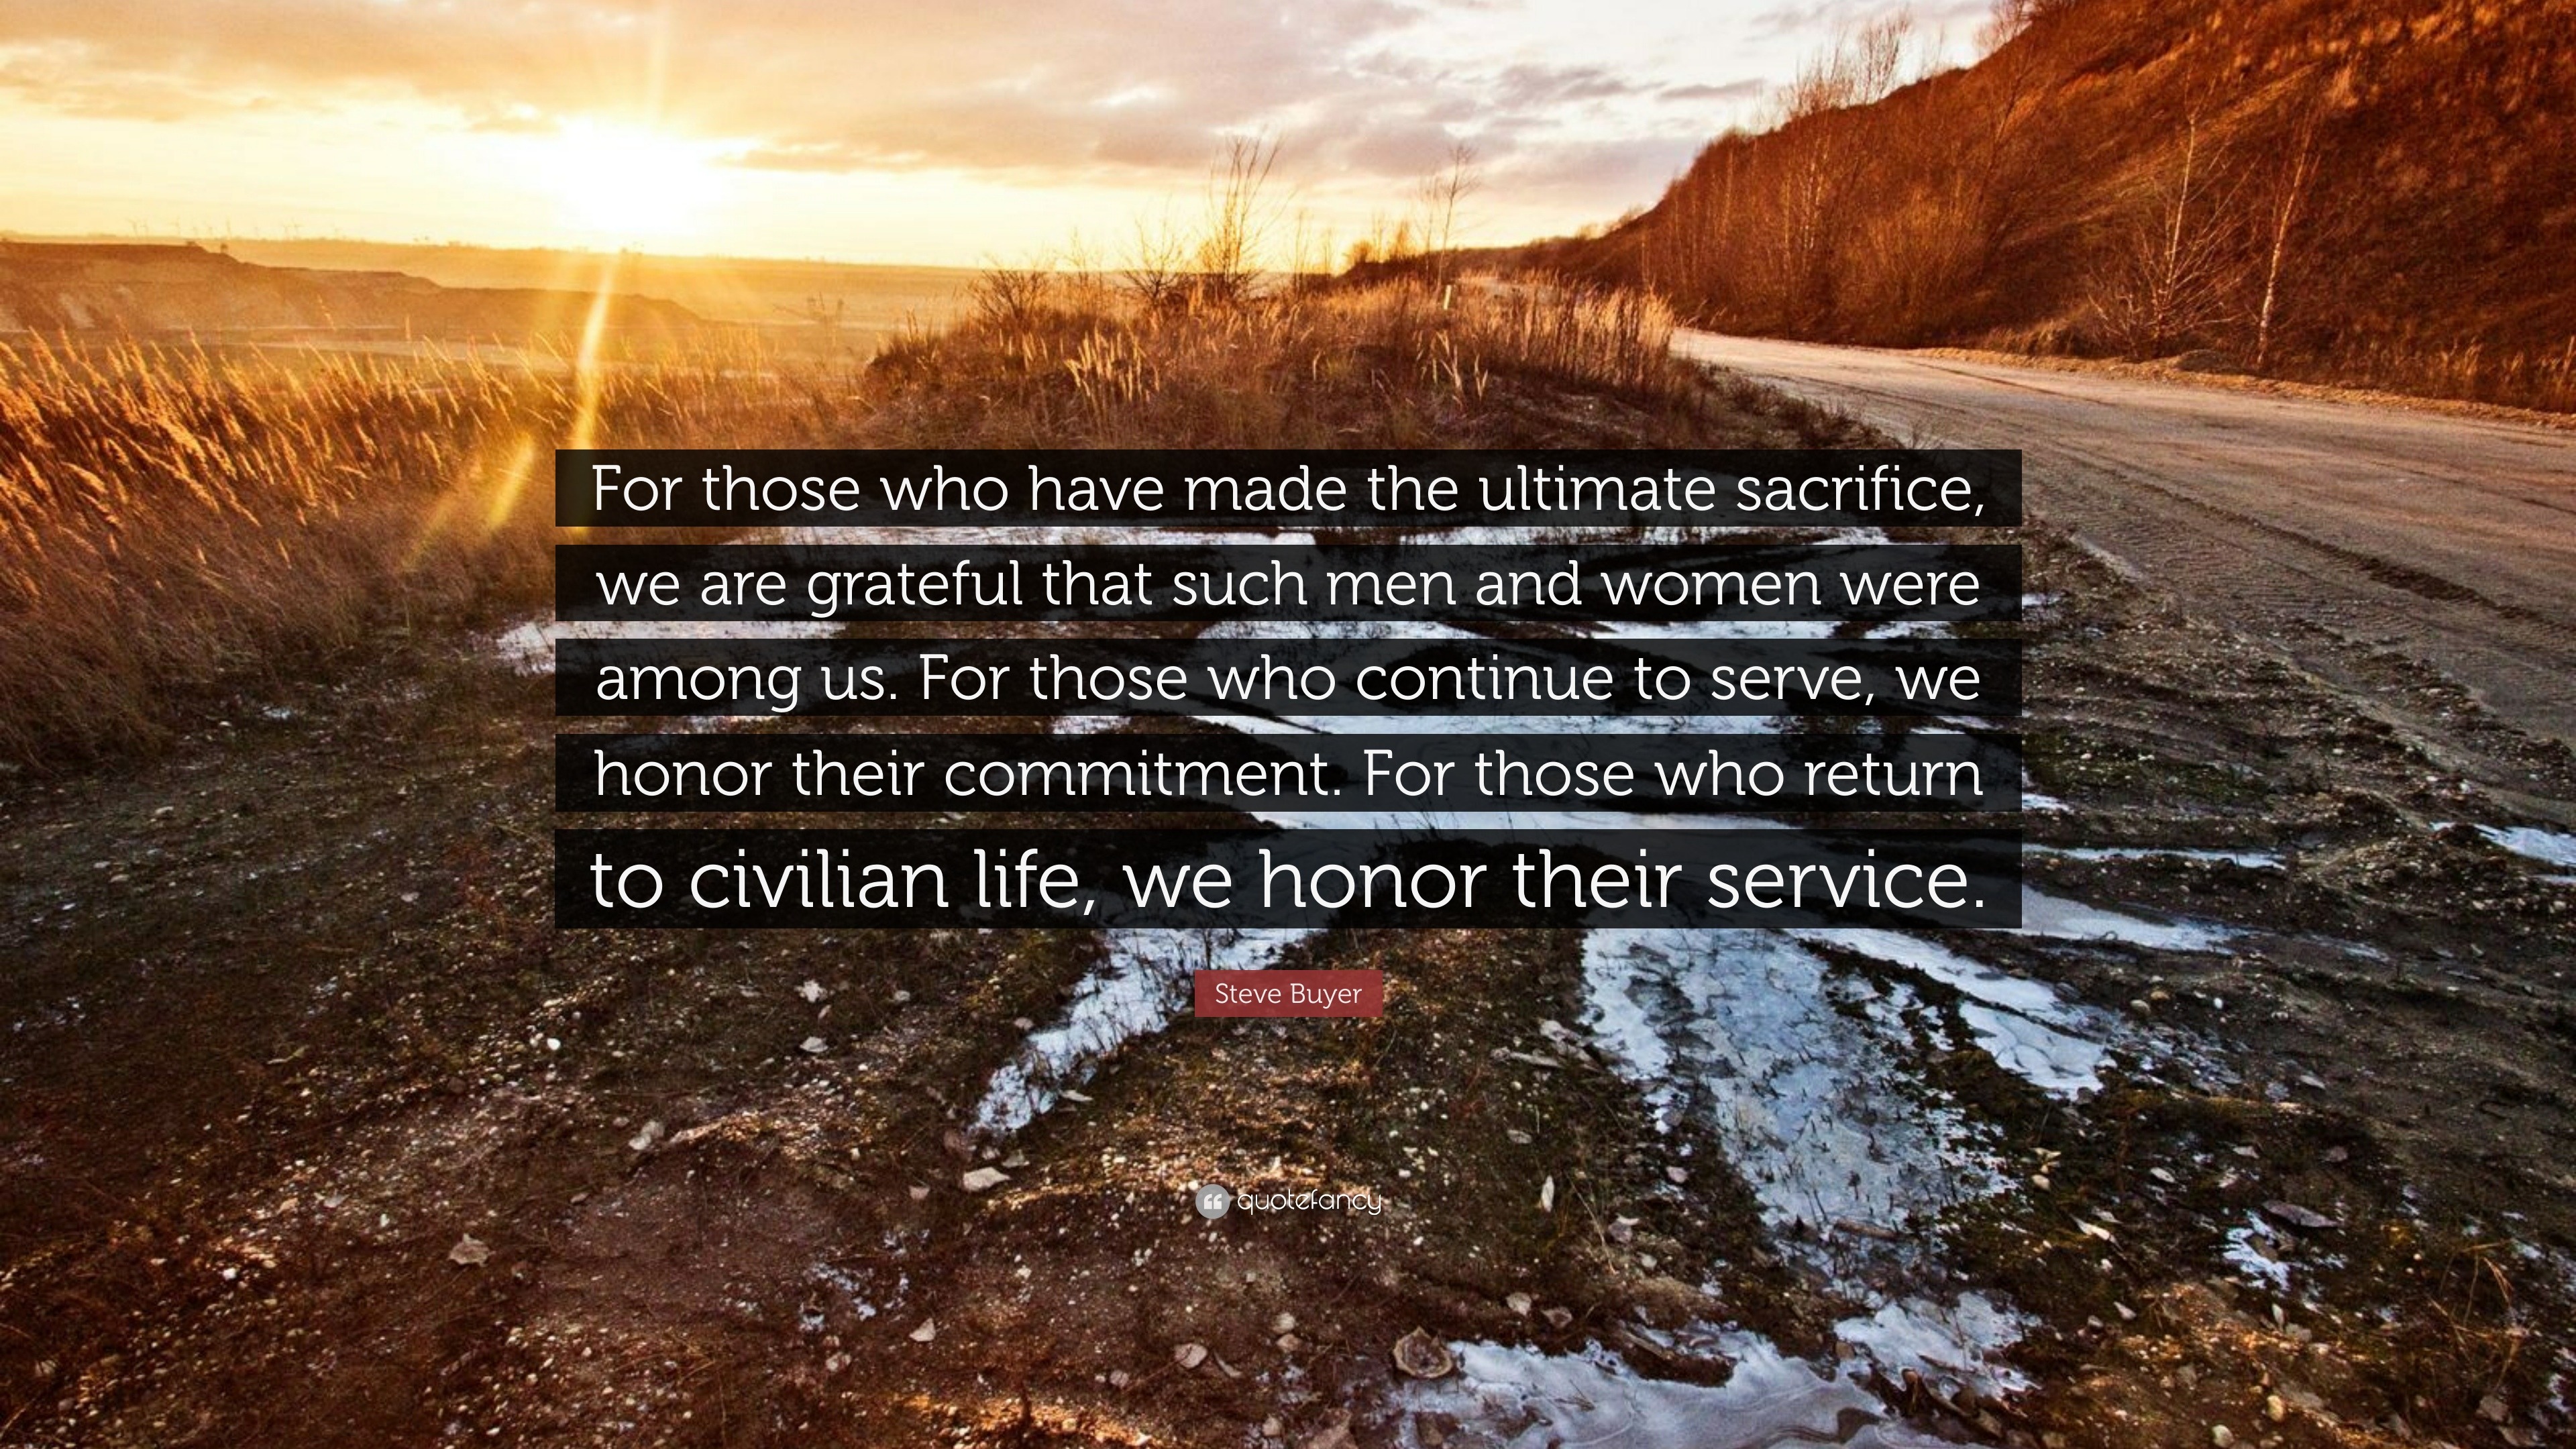 Honoring the ultimate sacrifice